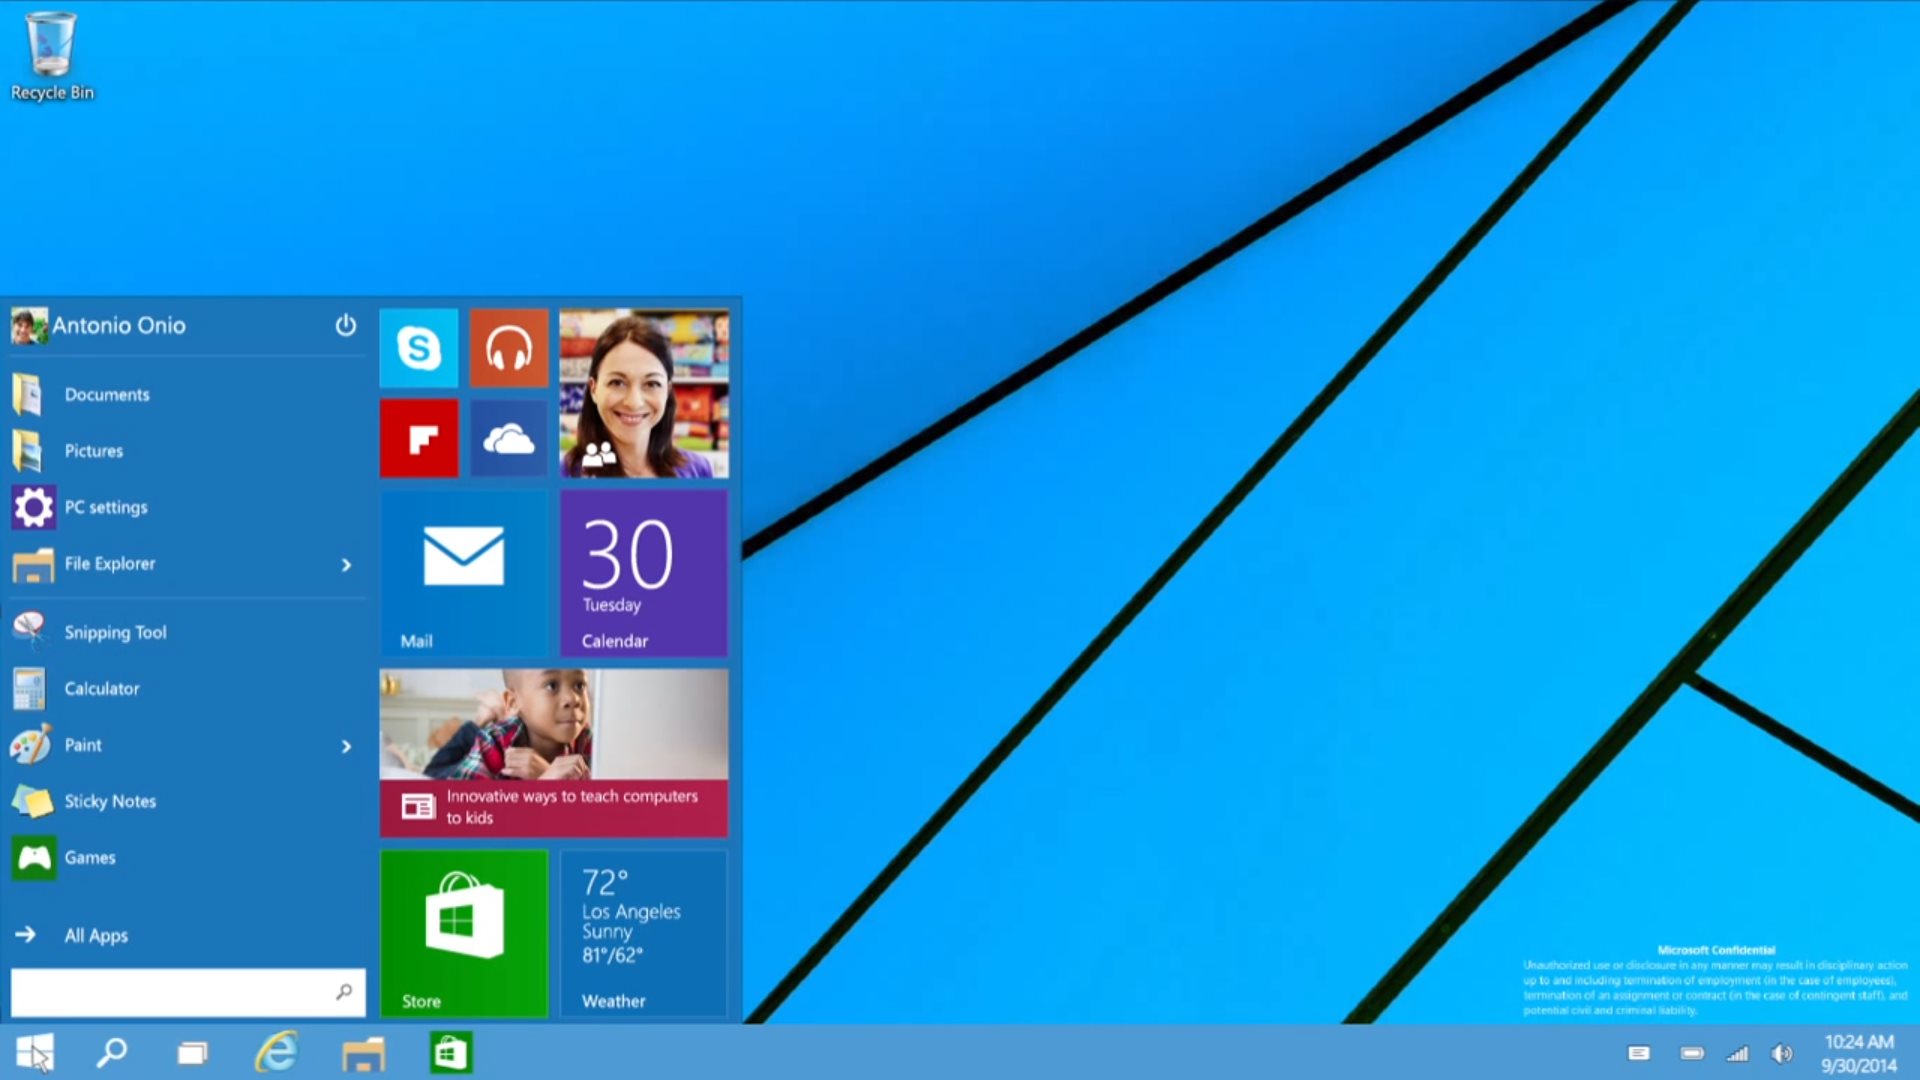 Windows 10: Charms Bar Removed, No Start Screen For Desktops.